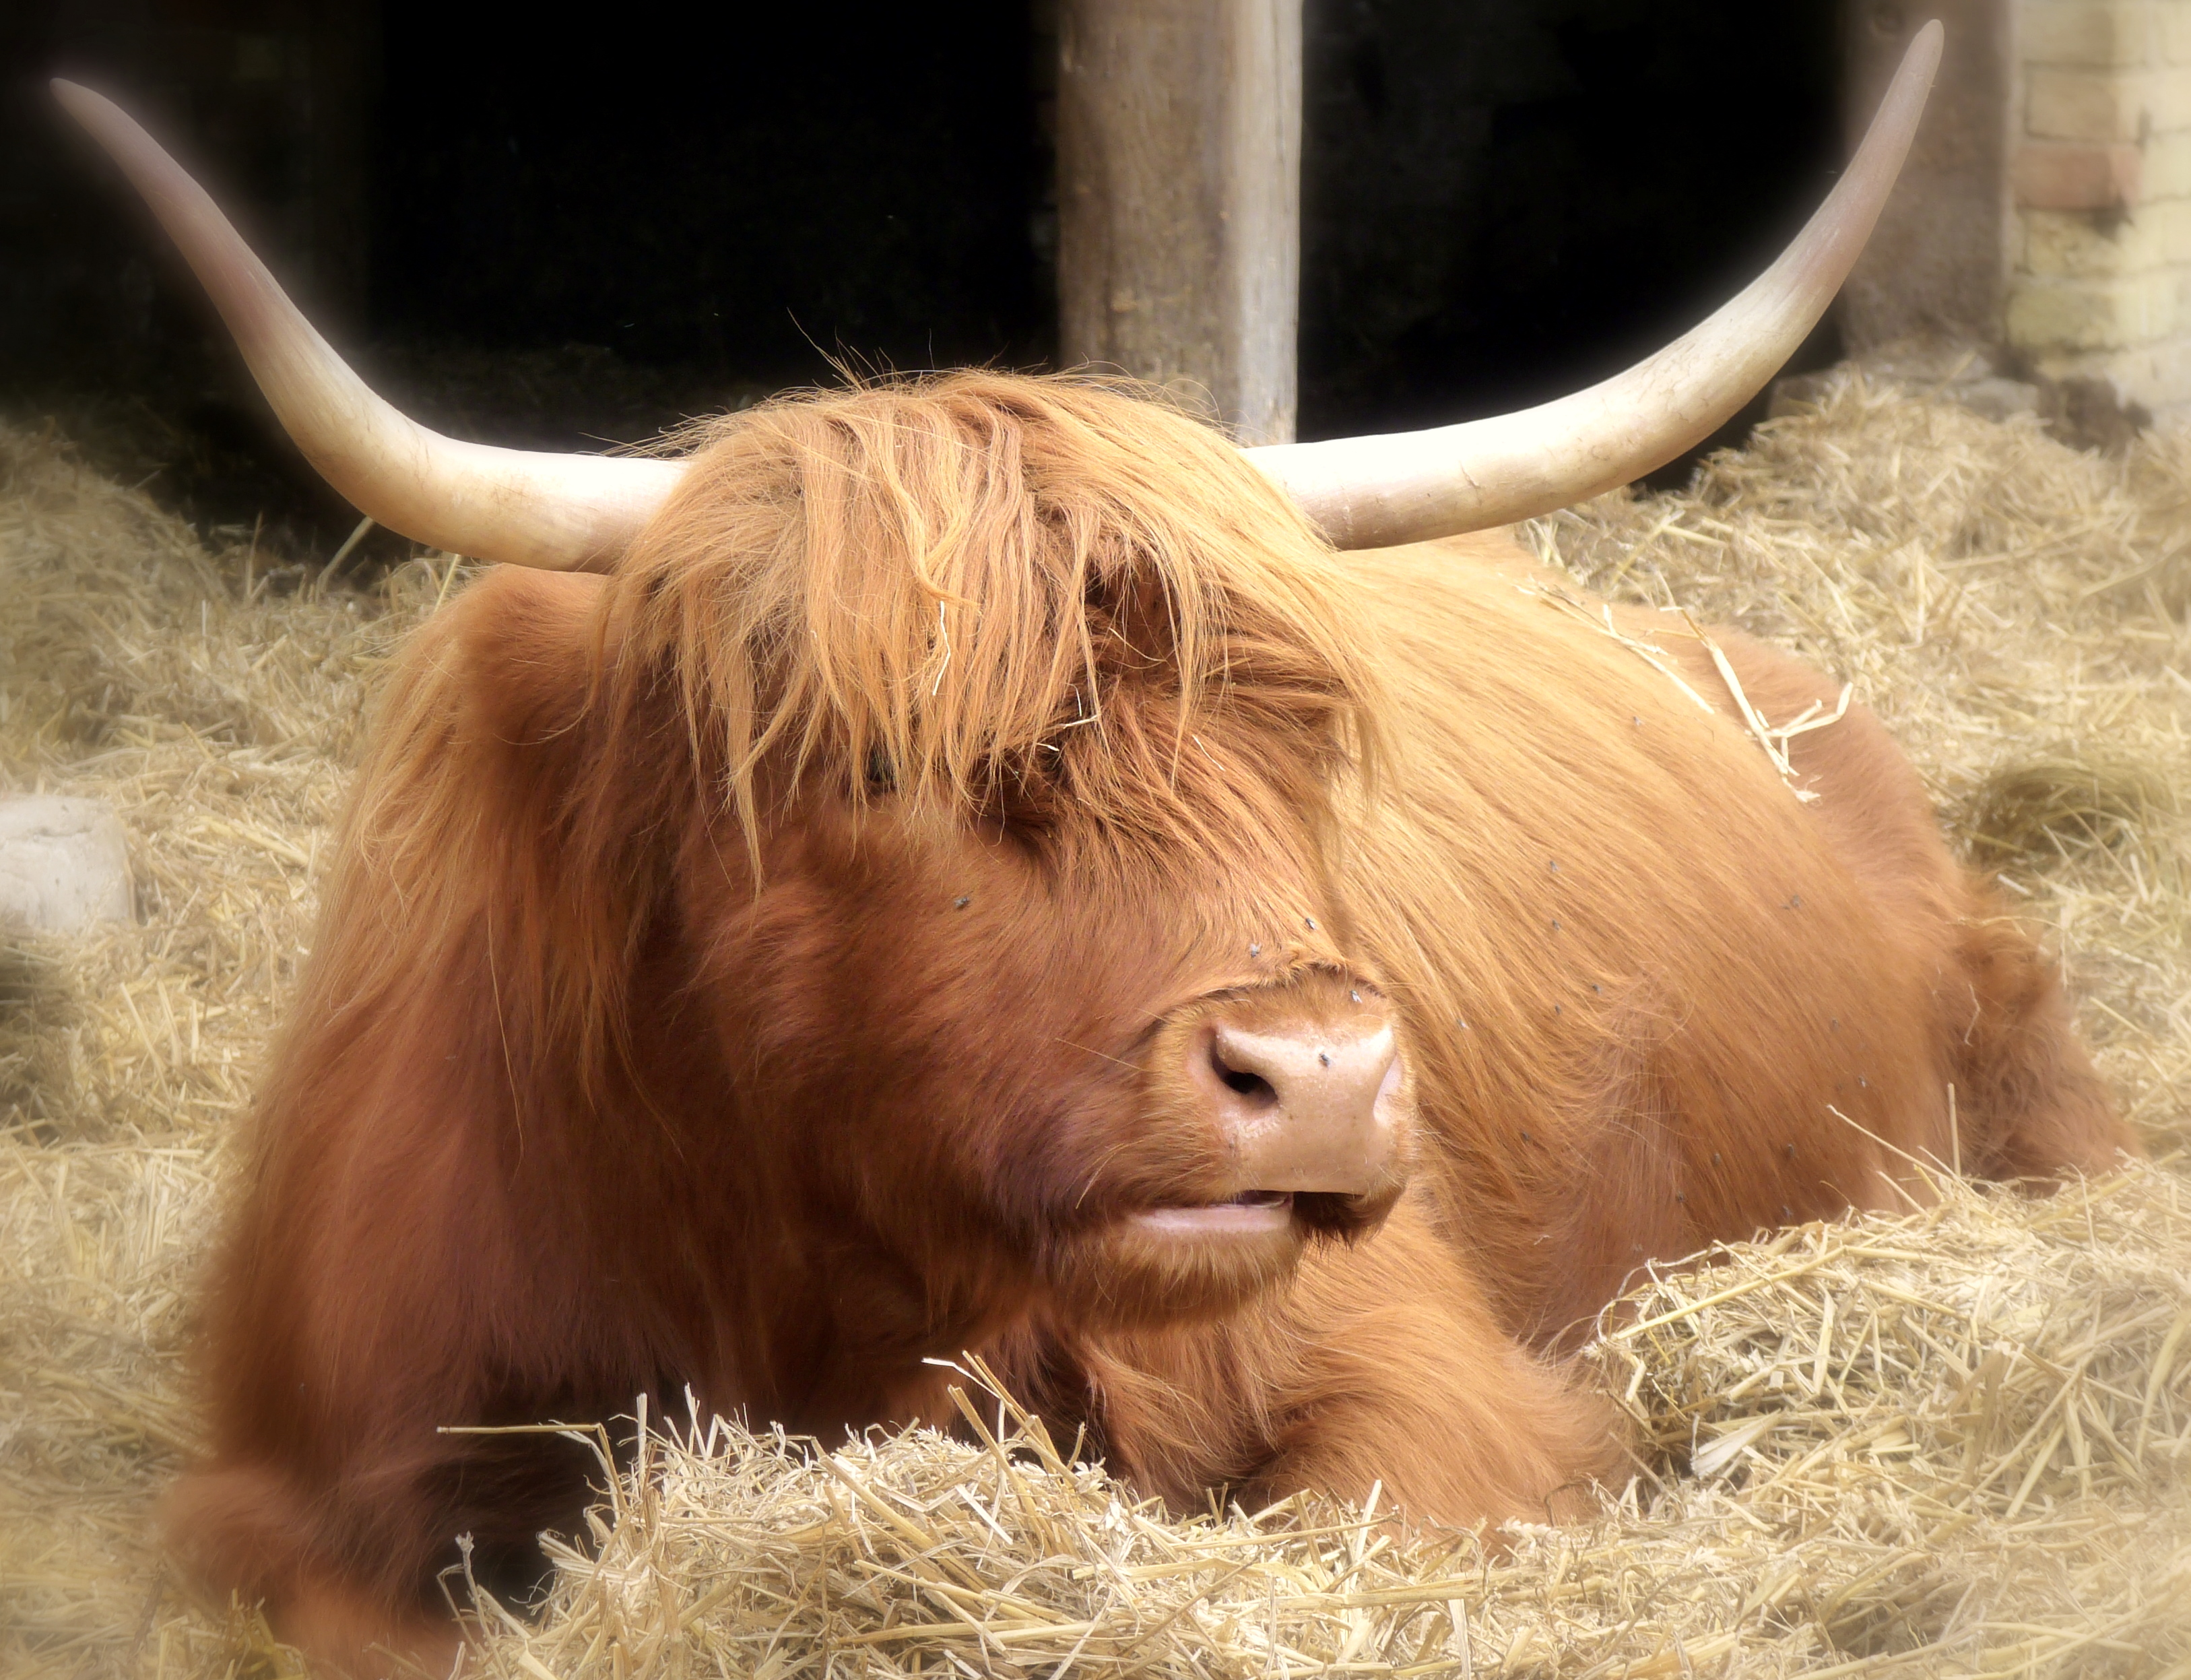 Highland cow photo